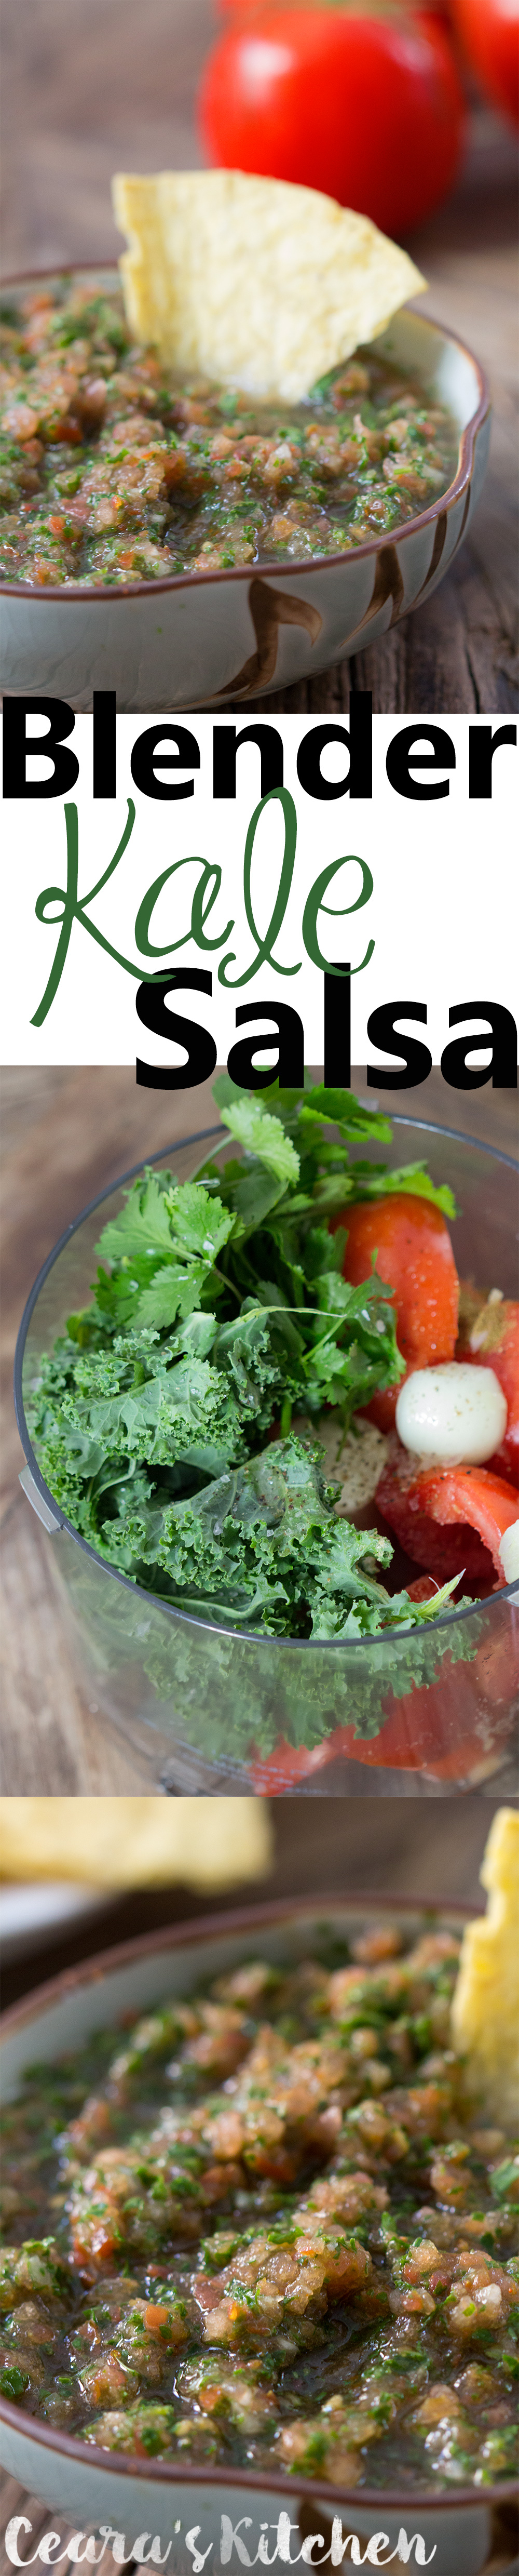 fresh salsa blender kale salsa 